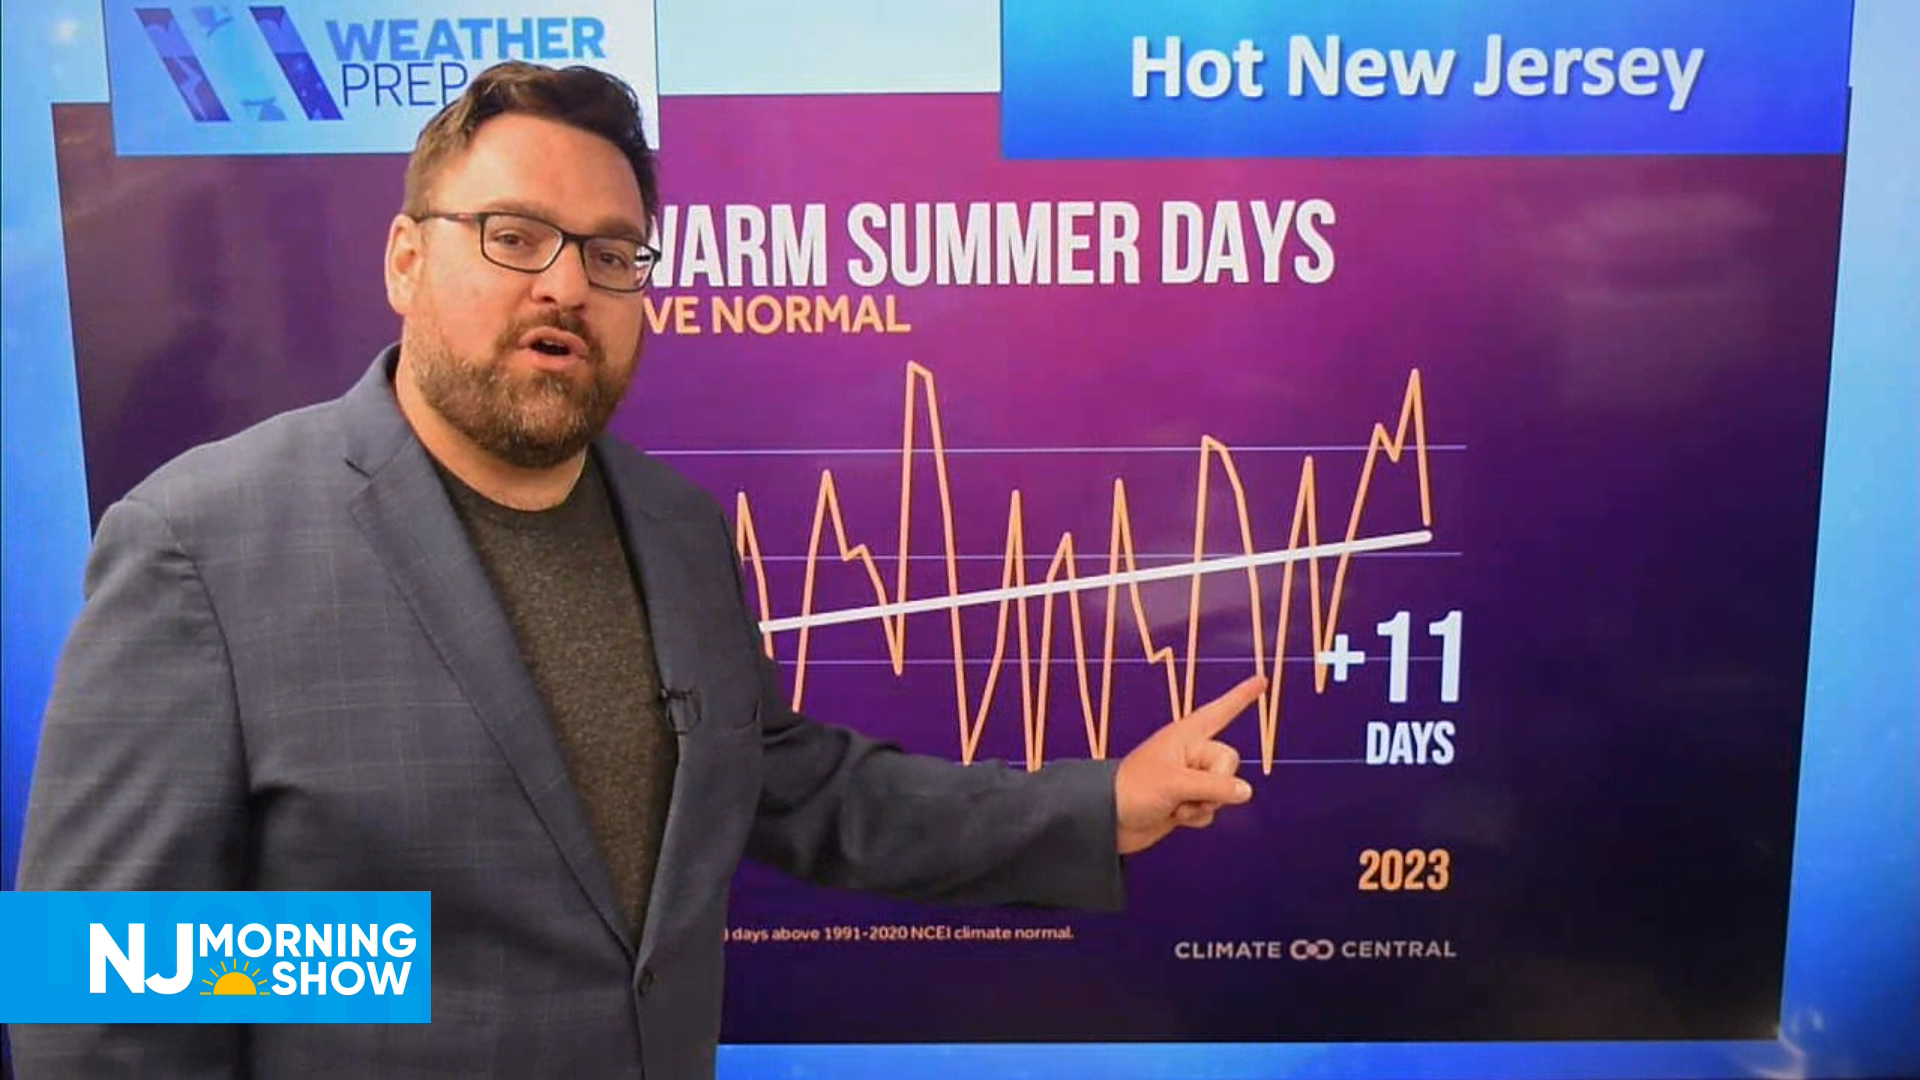 NJ Morning Show – Hot NJ, More Summer Like Days